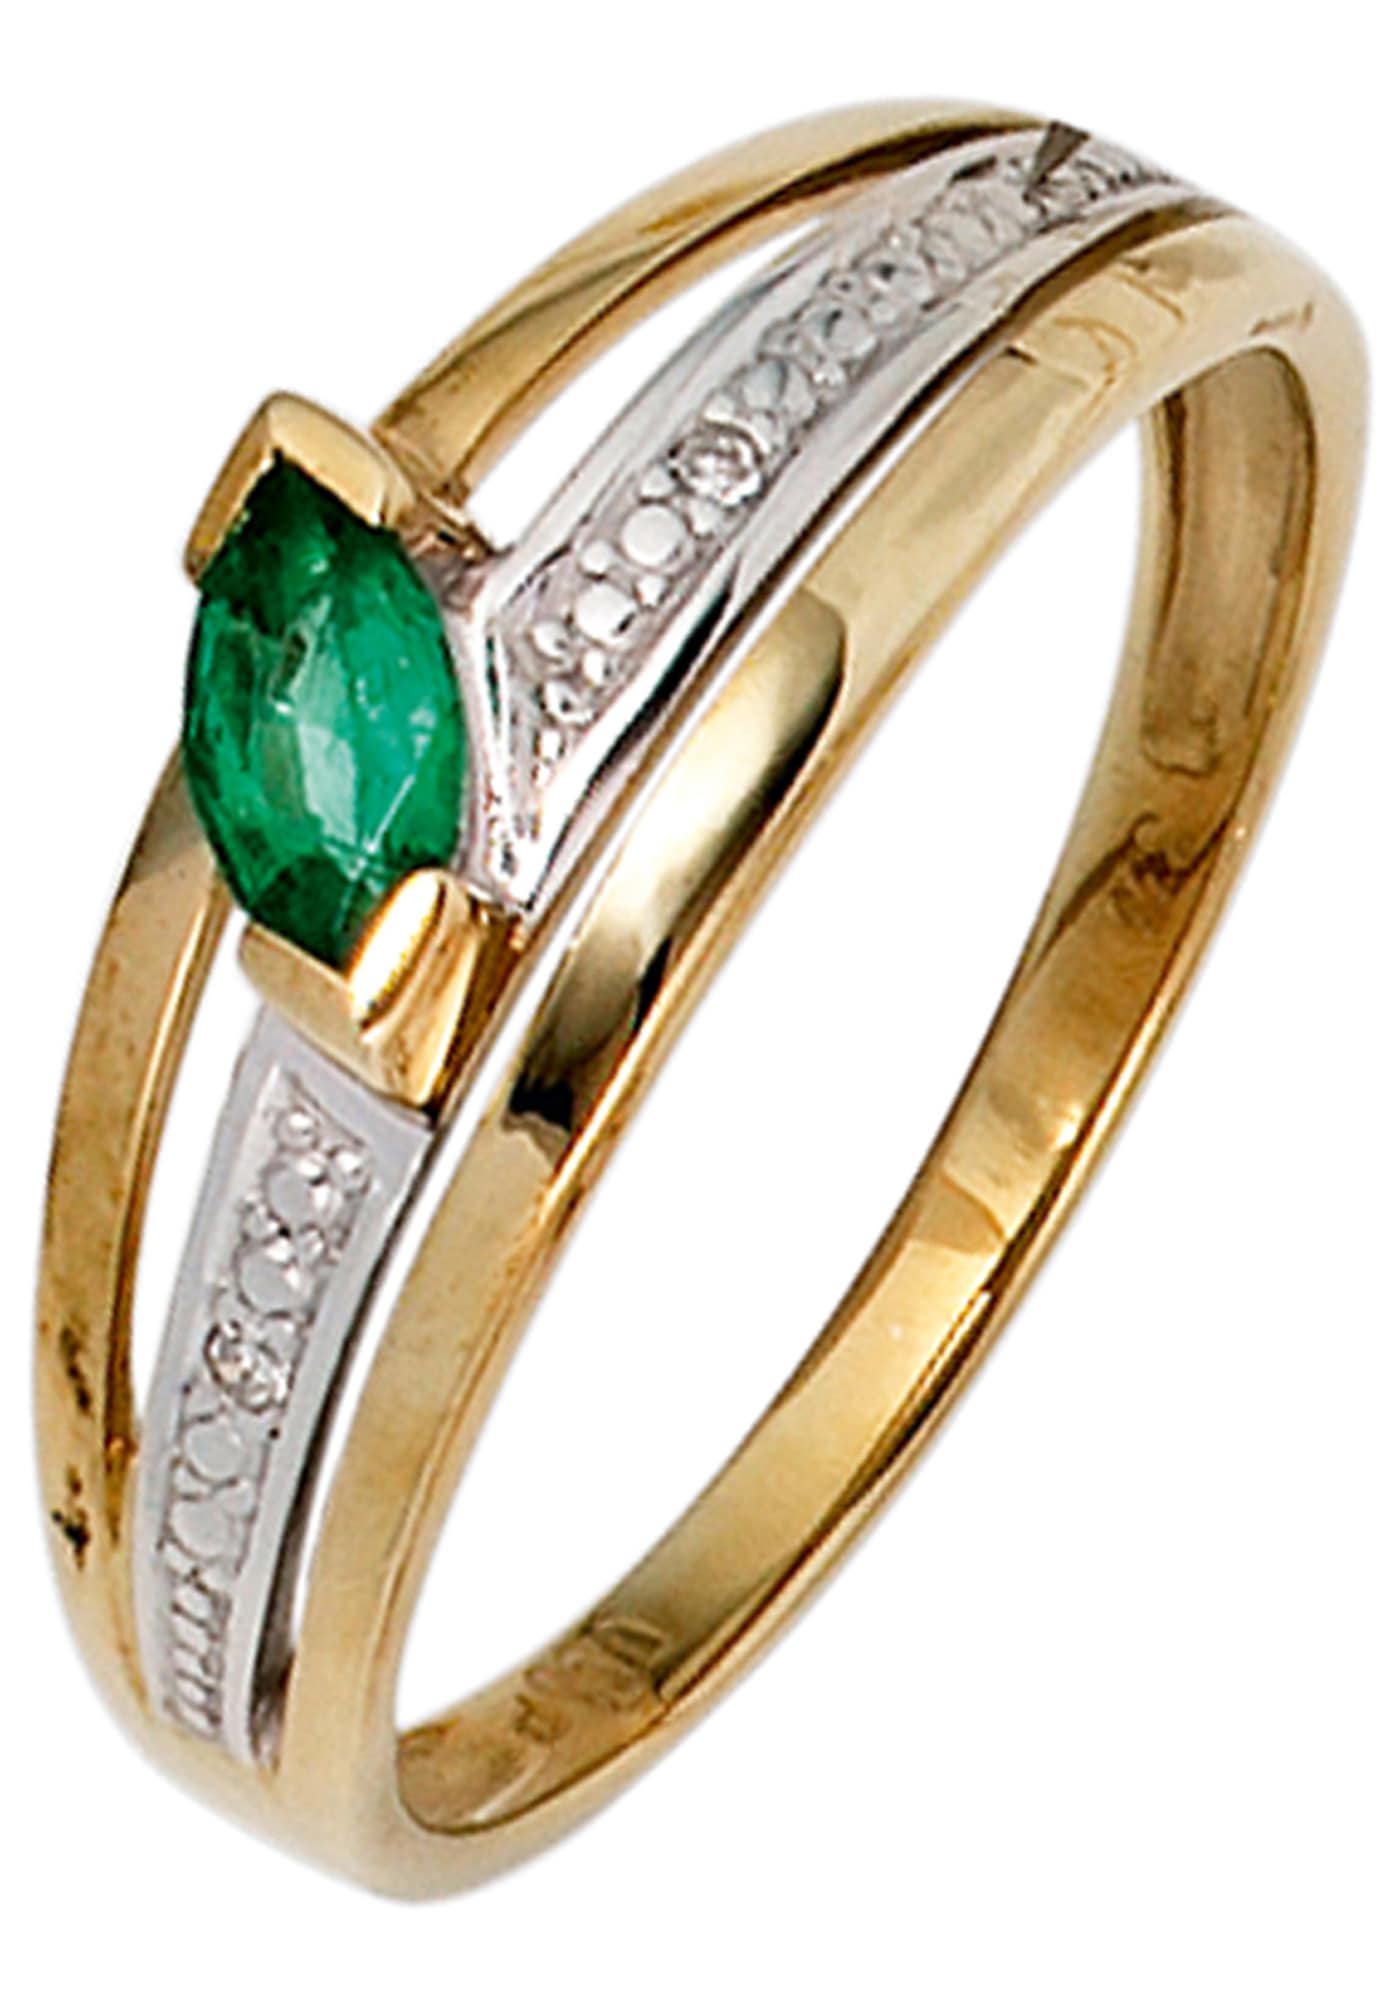 Diamantring, 585 Gold bicolor mit 2 Diamanten und Smaragd